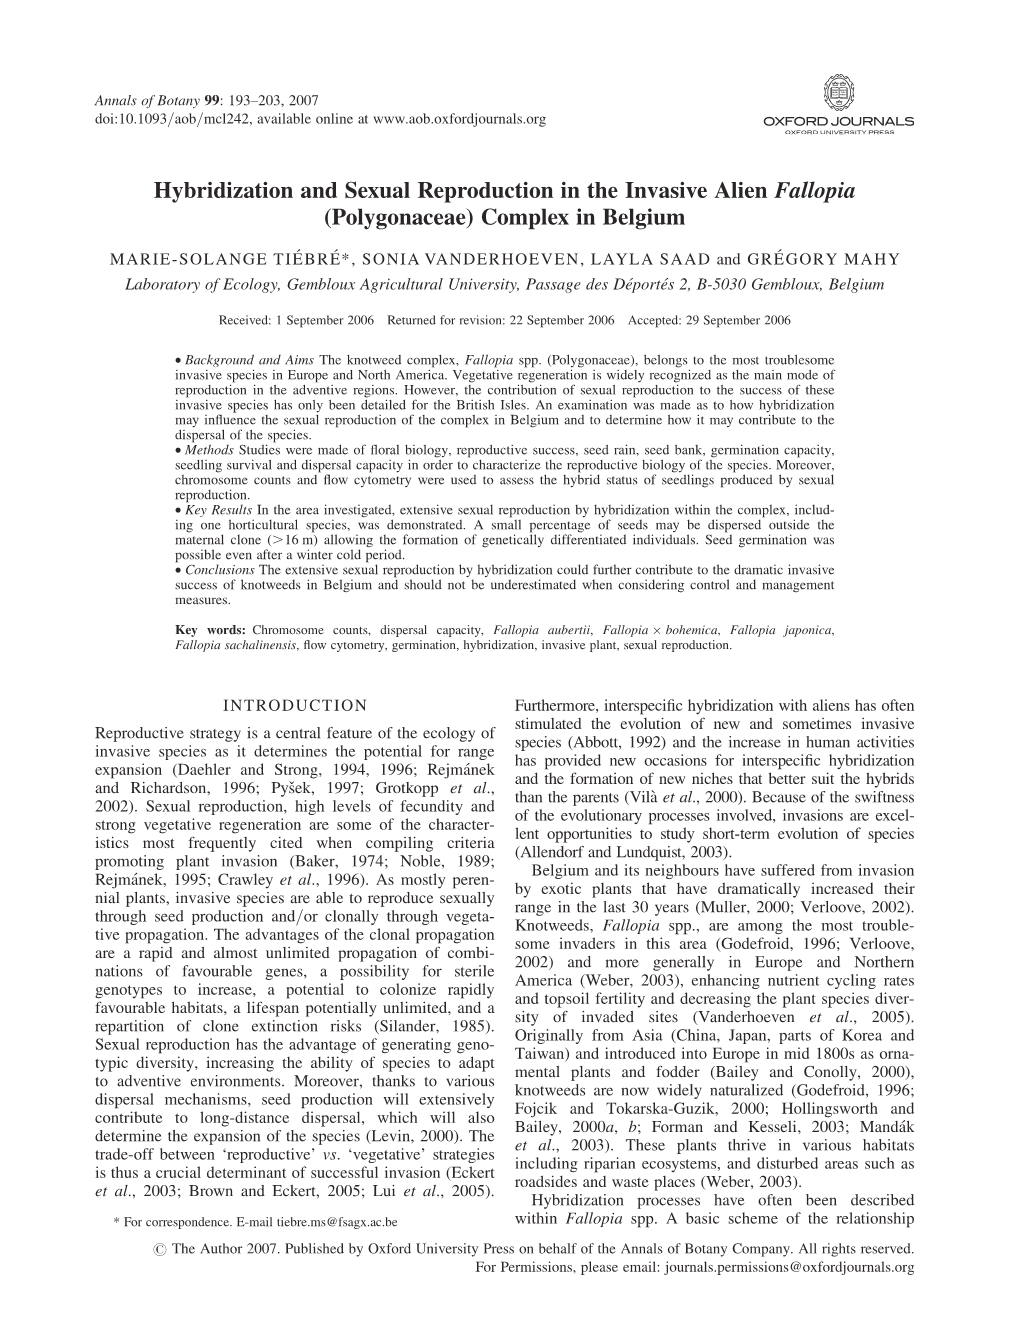 Hybridization and Sexual Reproduction in the Invasive Alien Fallopia (Polygonaceae) Complex in Belgium